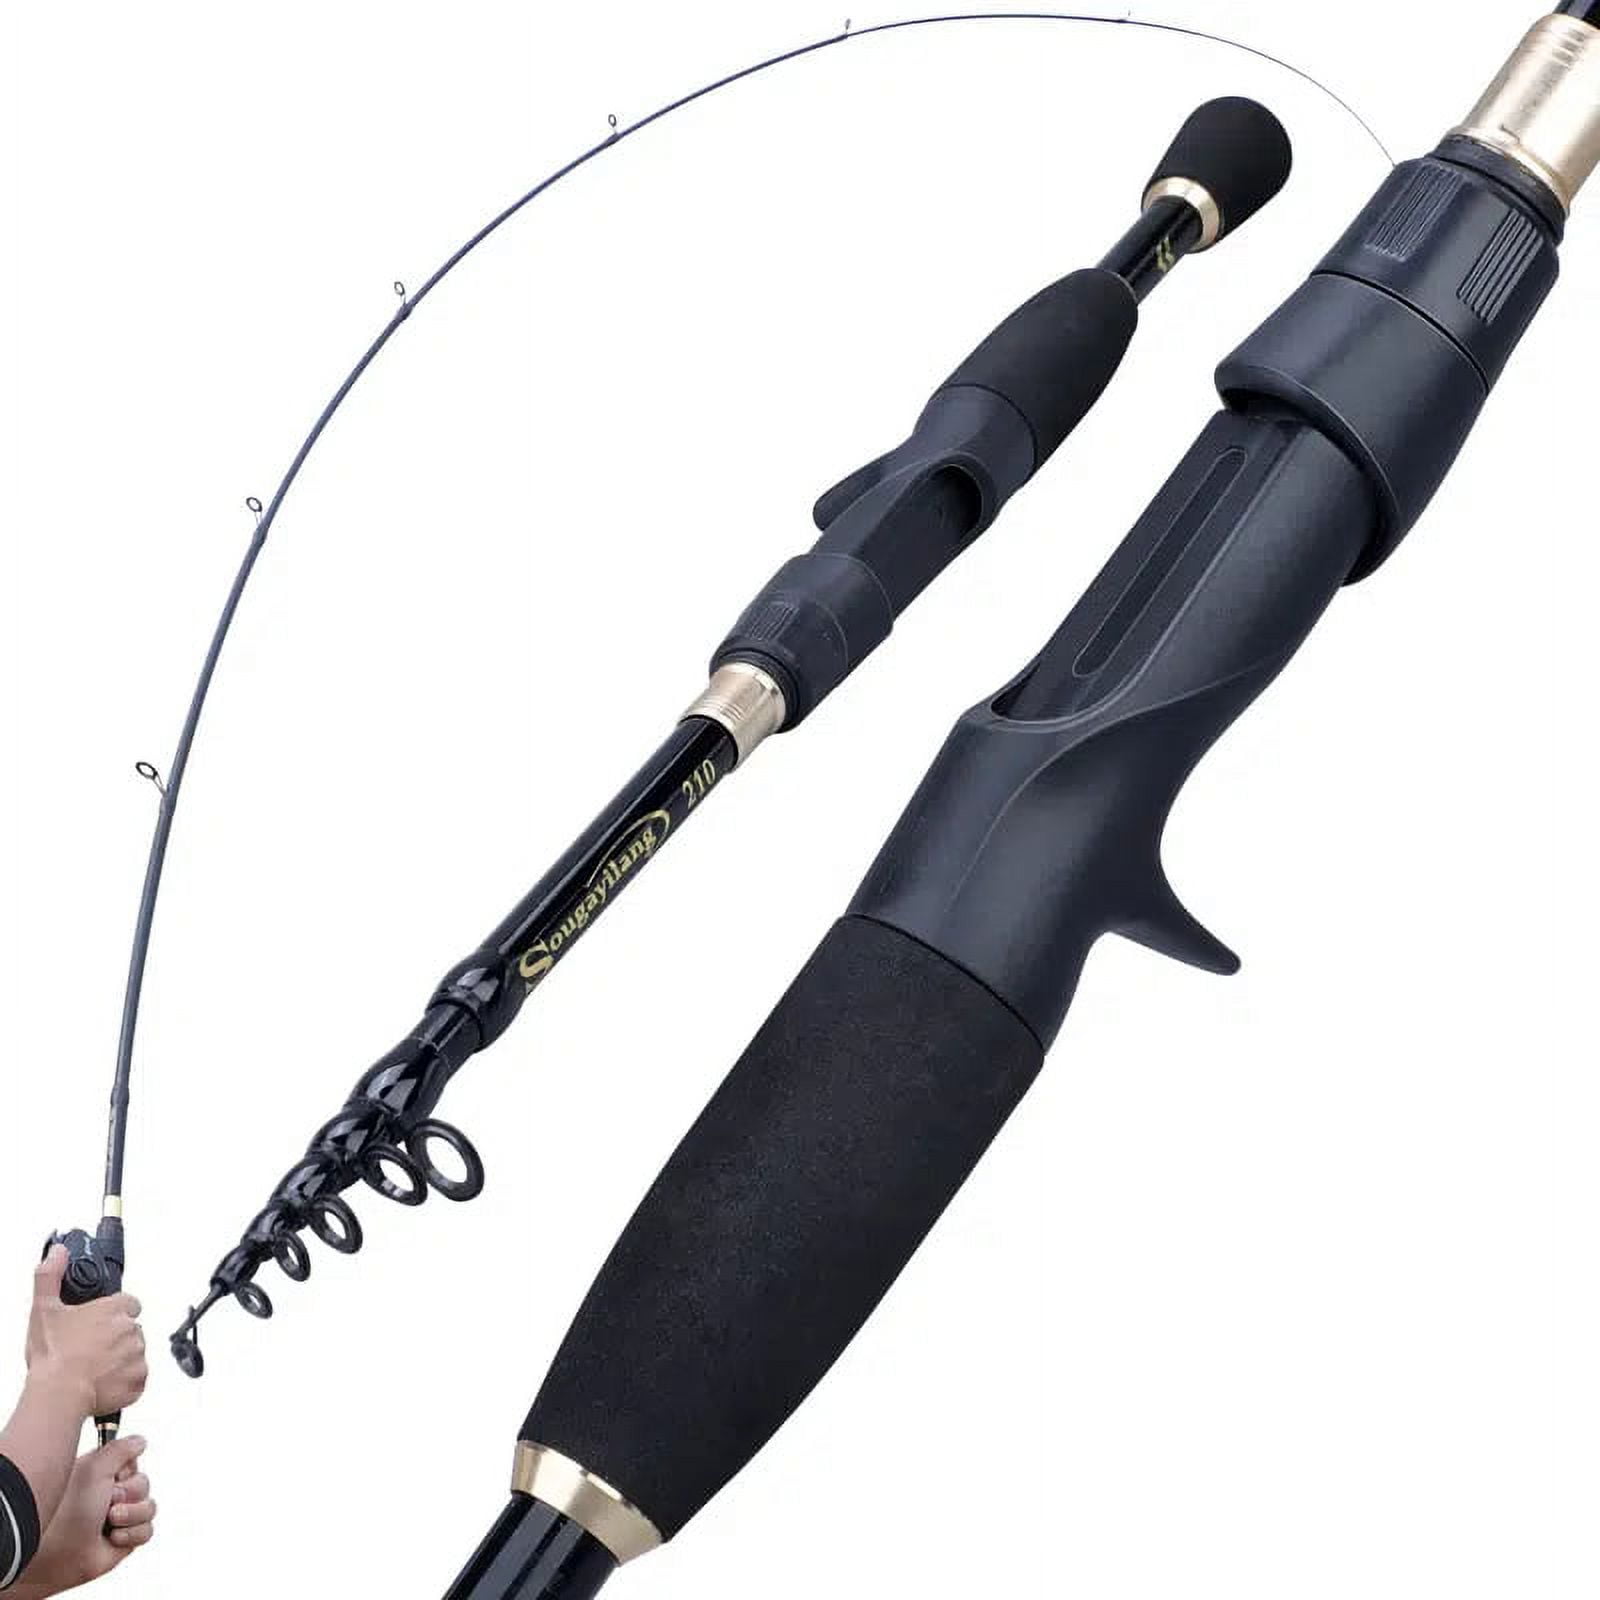 Telescopic Fishing Rod, 24T Carbon Casting/Spinning Travel Fishing